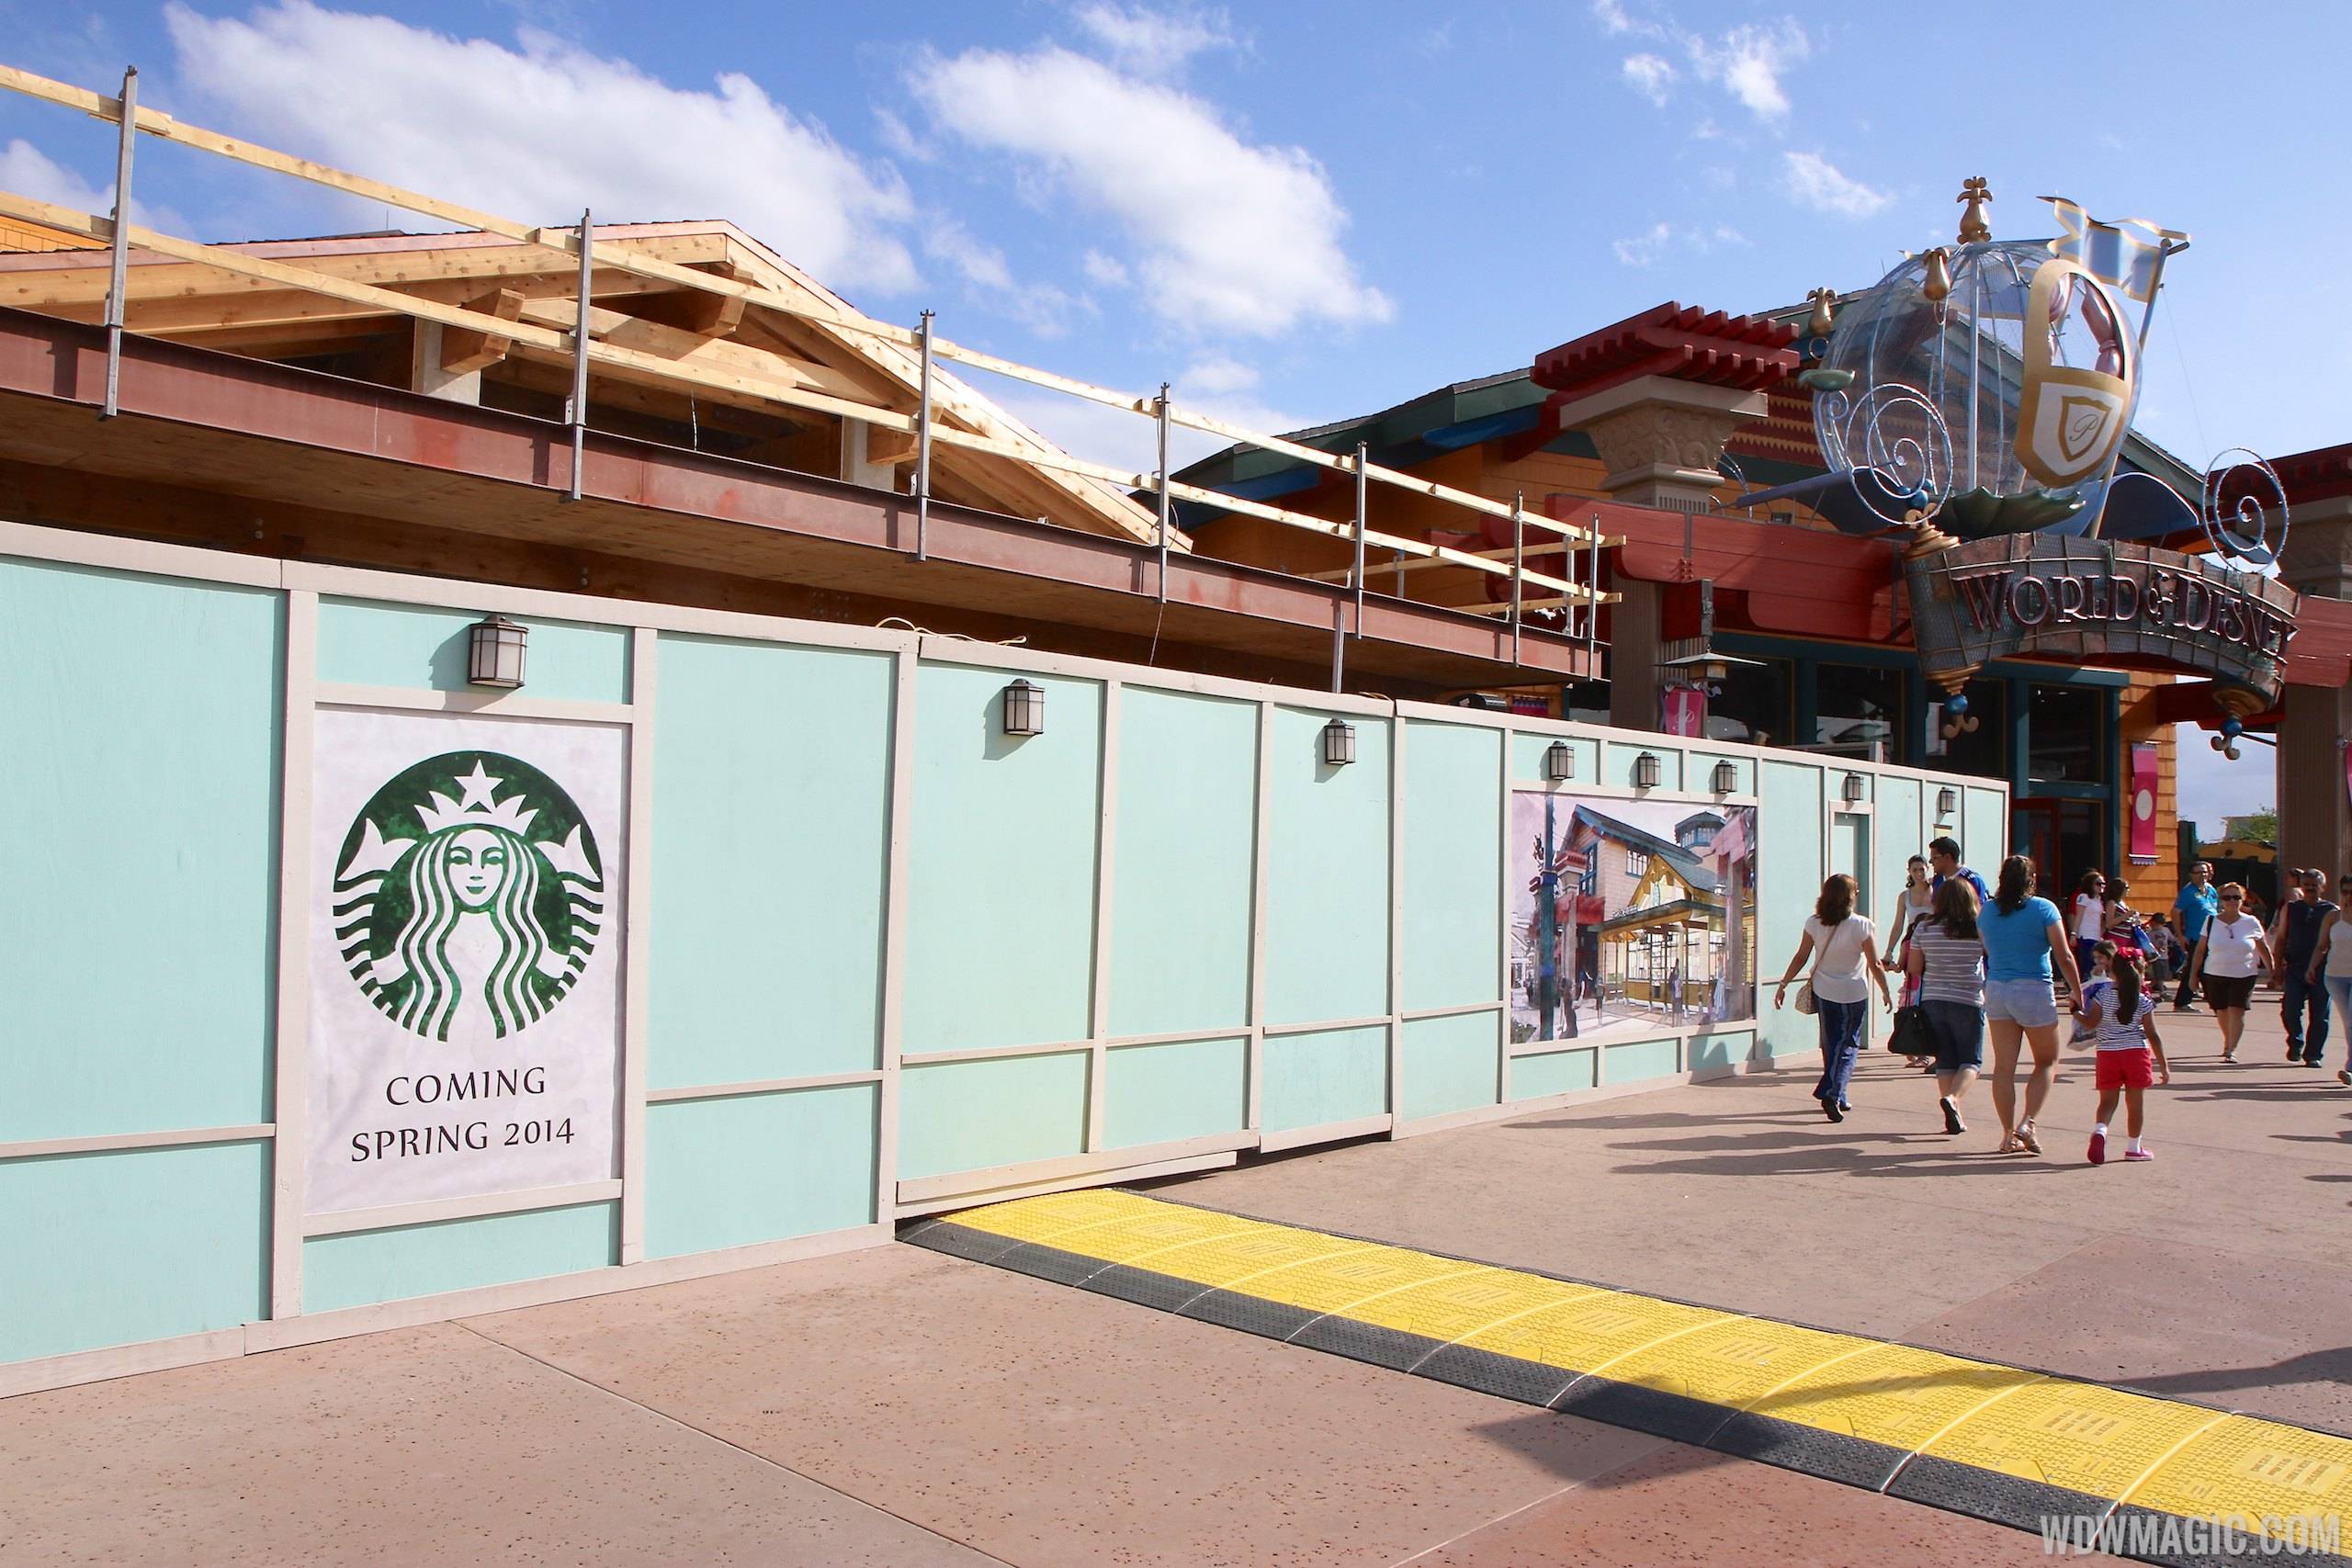 PHOTOS - Starbucks Marketplace construction at Downtown Disney